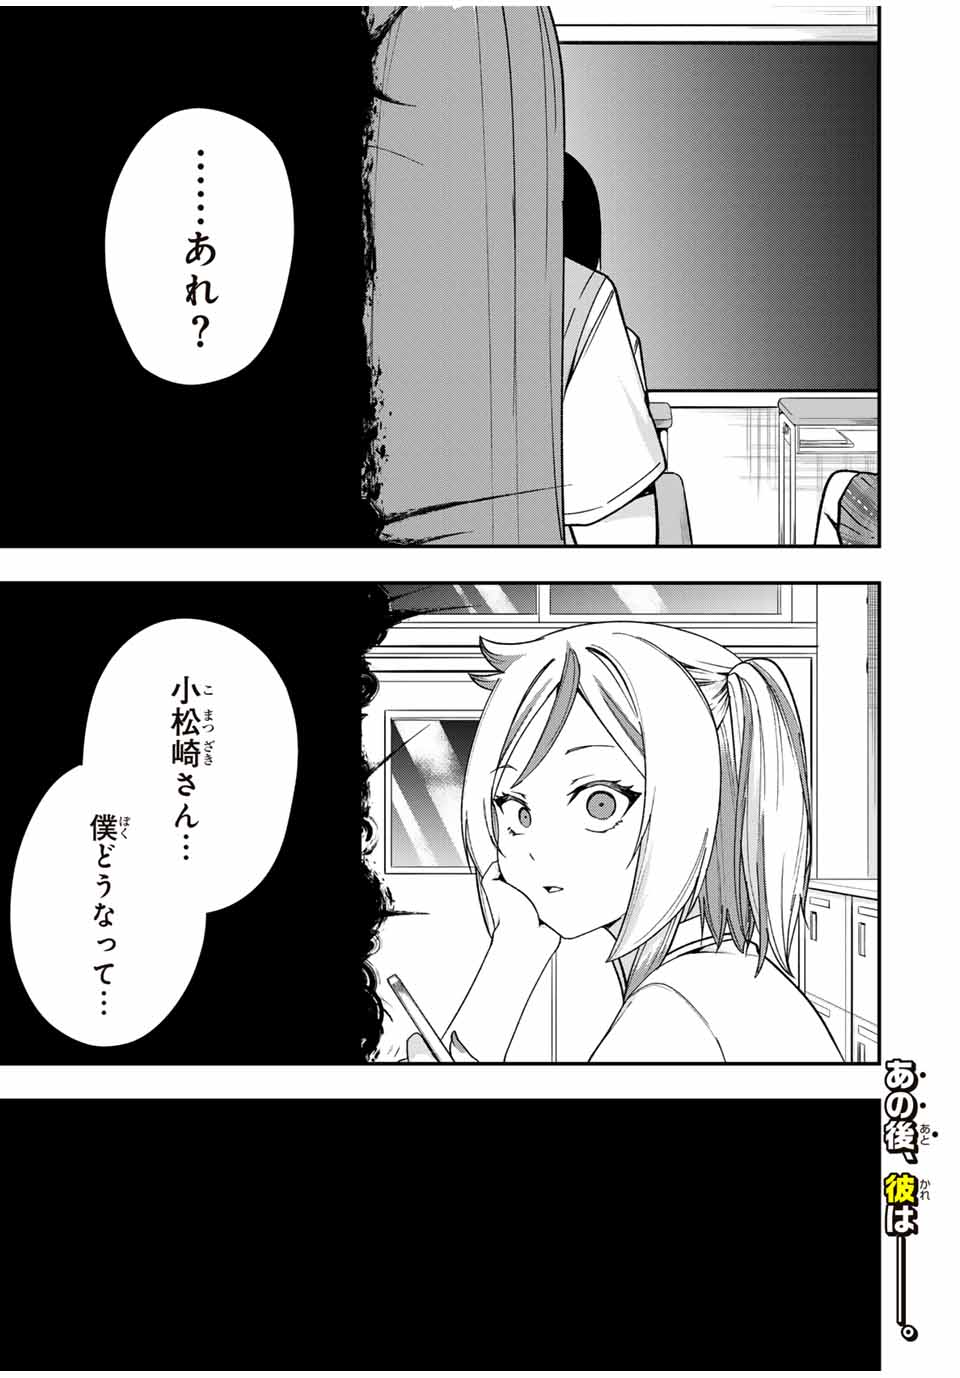 Heroine wa xx Okasegitai - Chapter 9 - Page 1